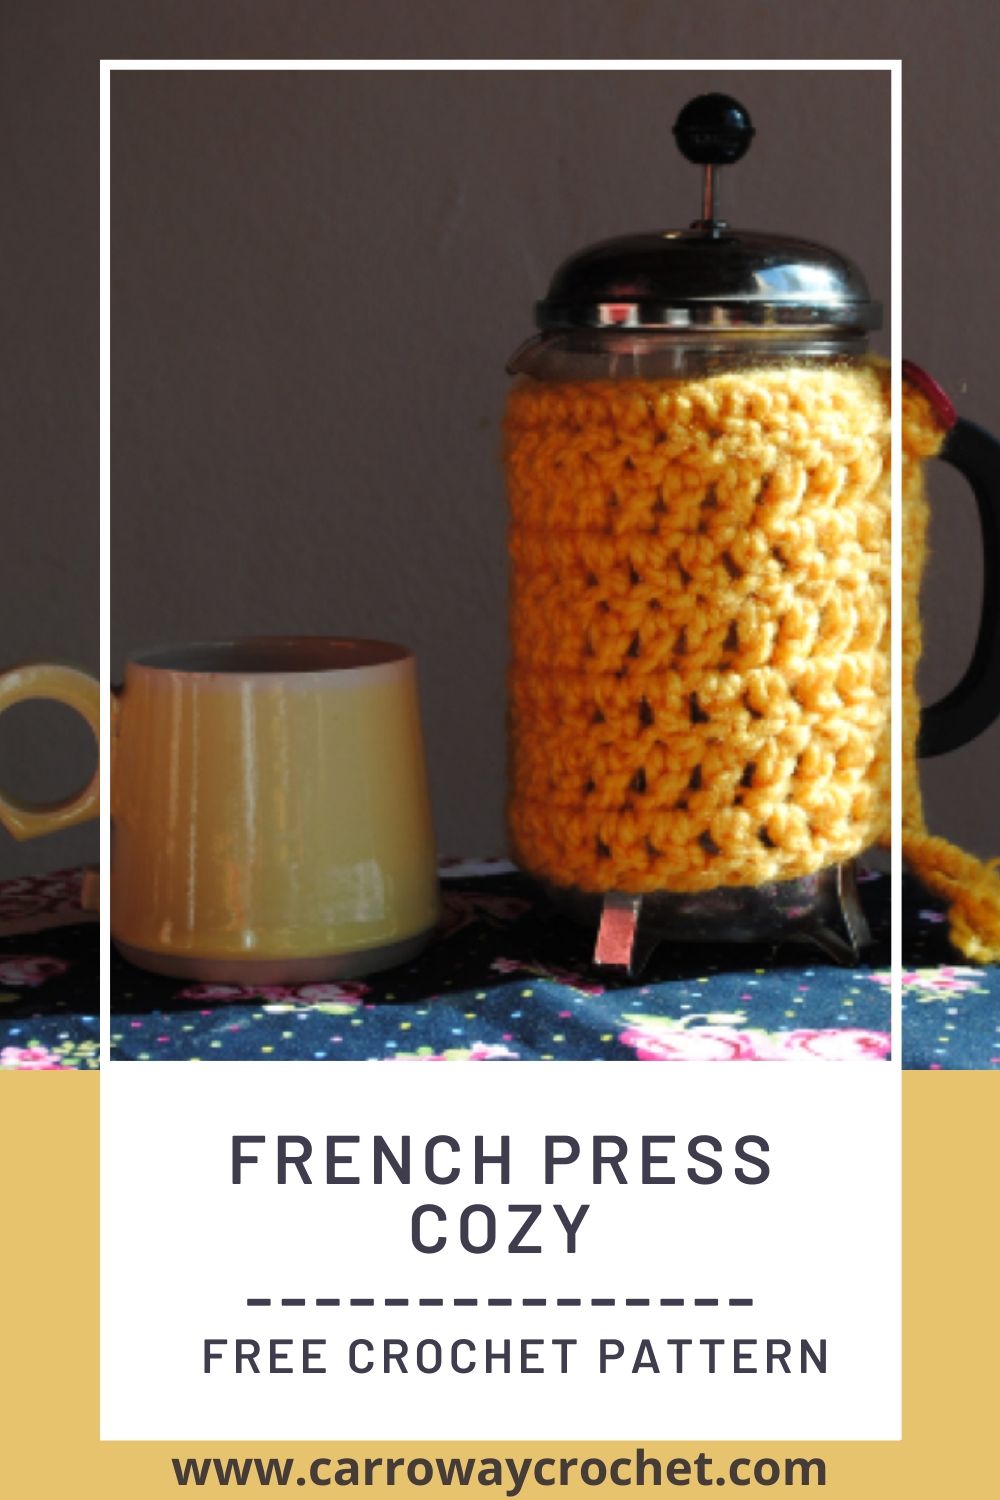 https://carrowaycrochet.com/wp-content/uploads/2020/05/French-Press-Cozy-Crochet.jpg